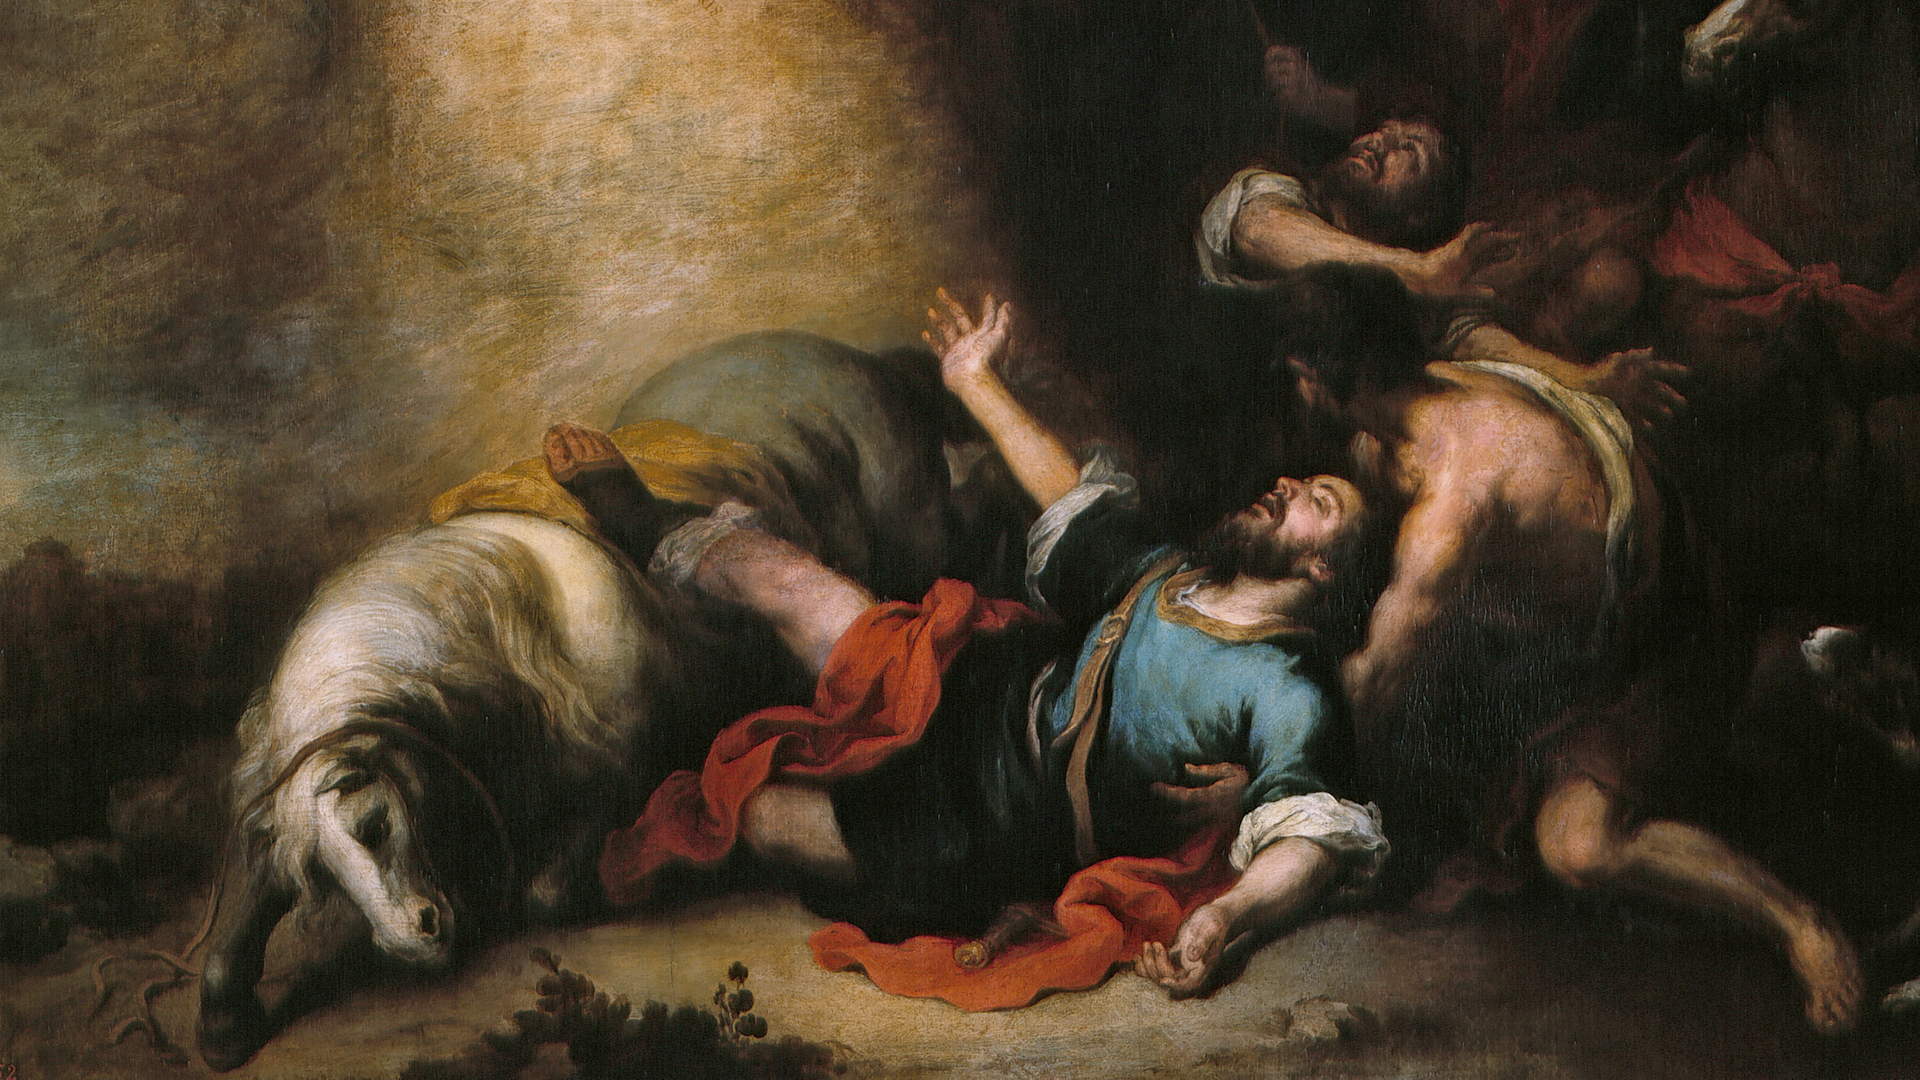 Detail from "The Conversion of Saint Paul" by Bartolomé Esteban Murillo. Public Domain Image.